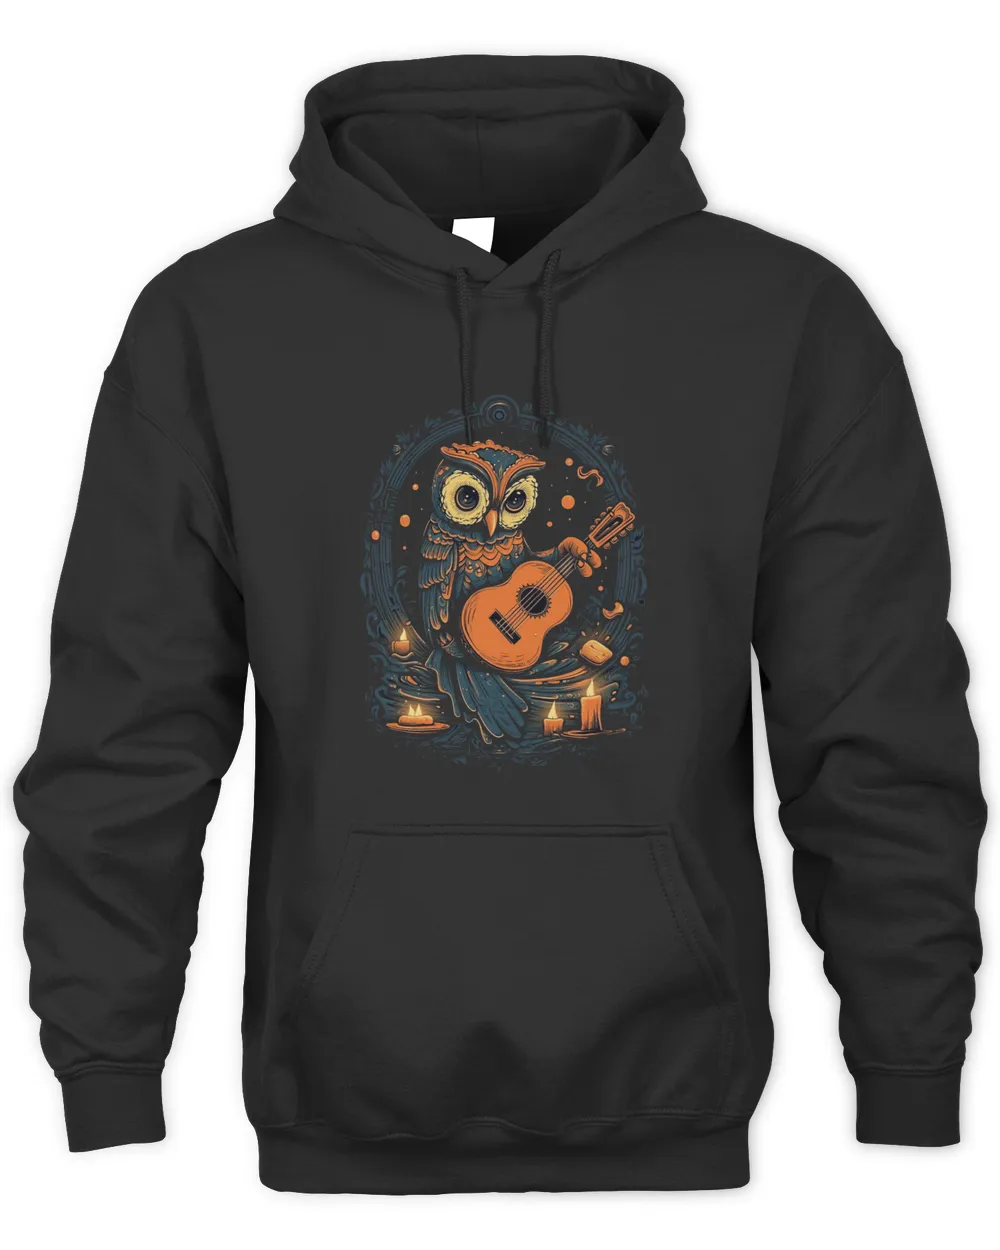 Owl Playing Classical Guitar Guitarist Musician Guitar